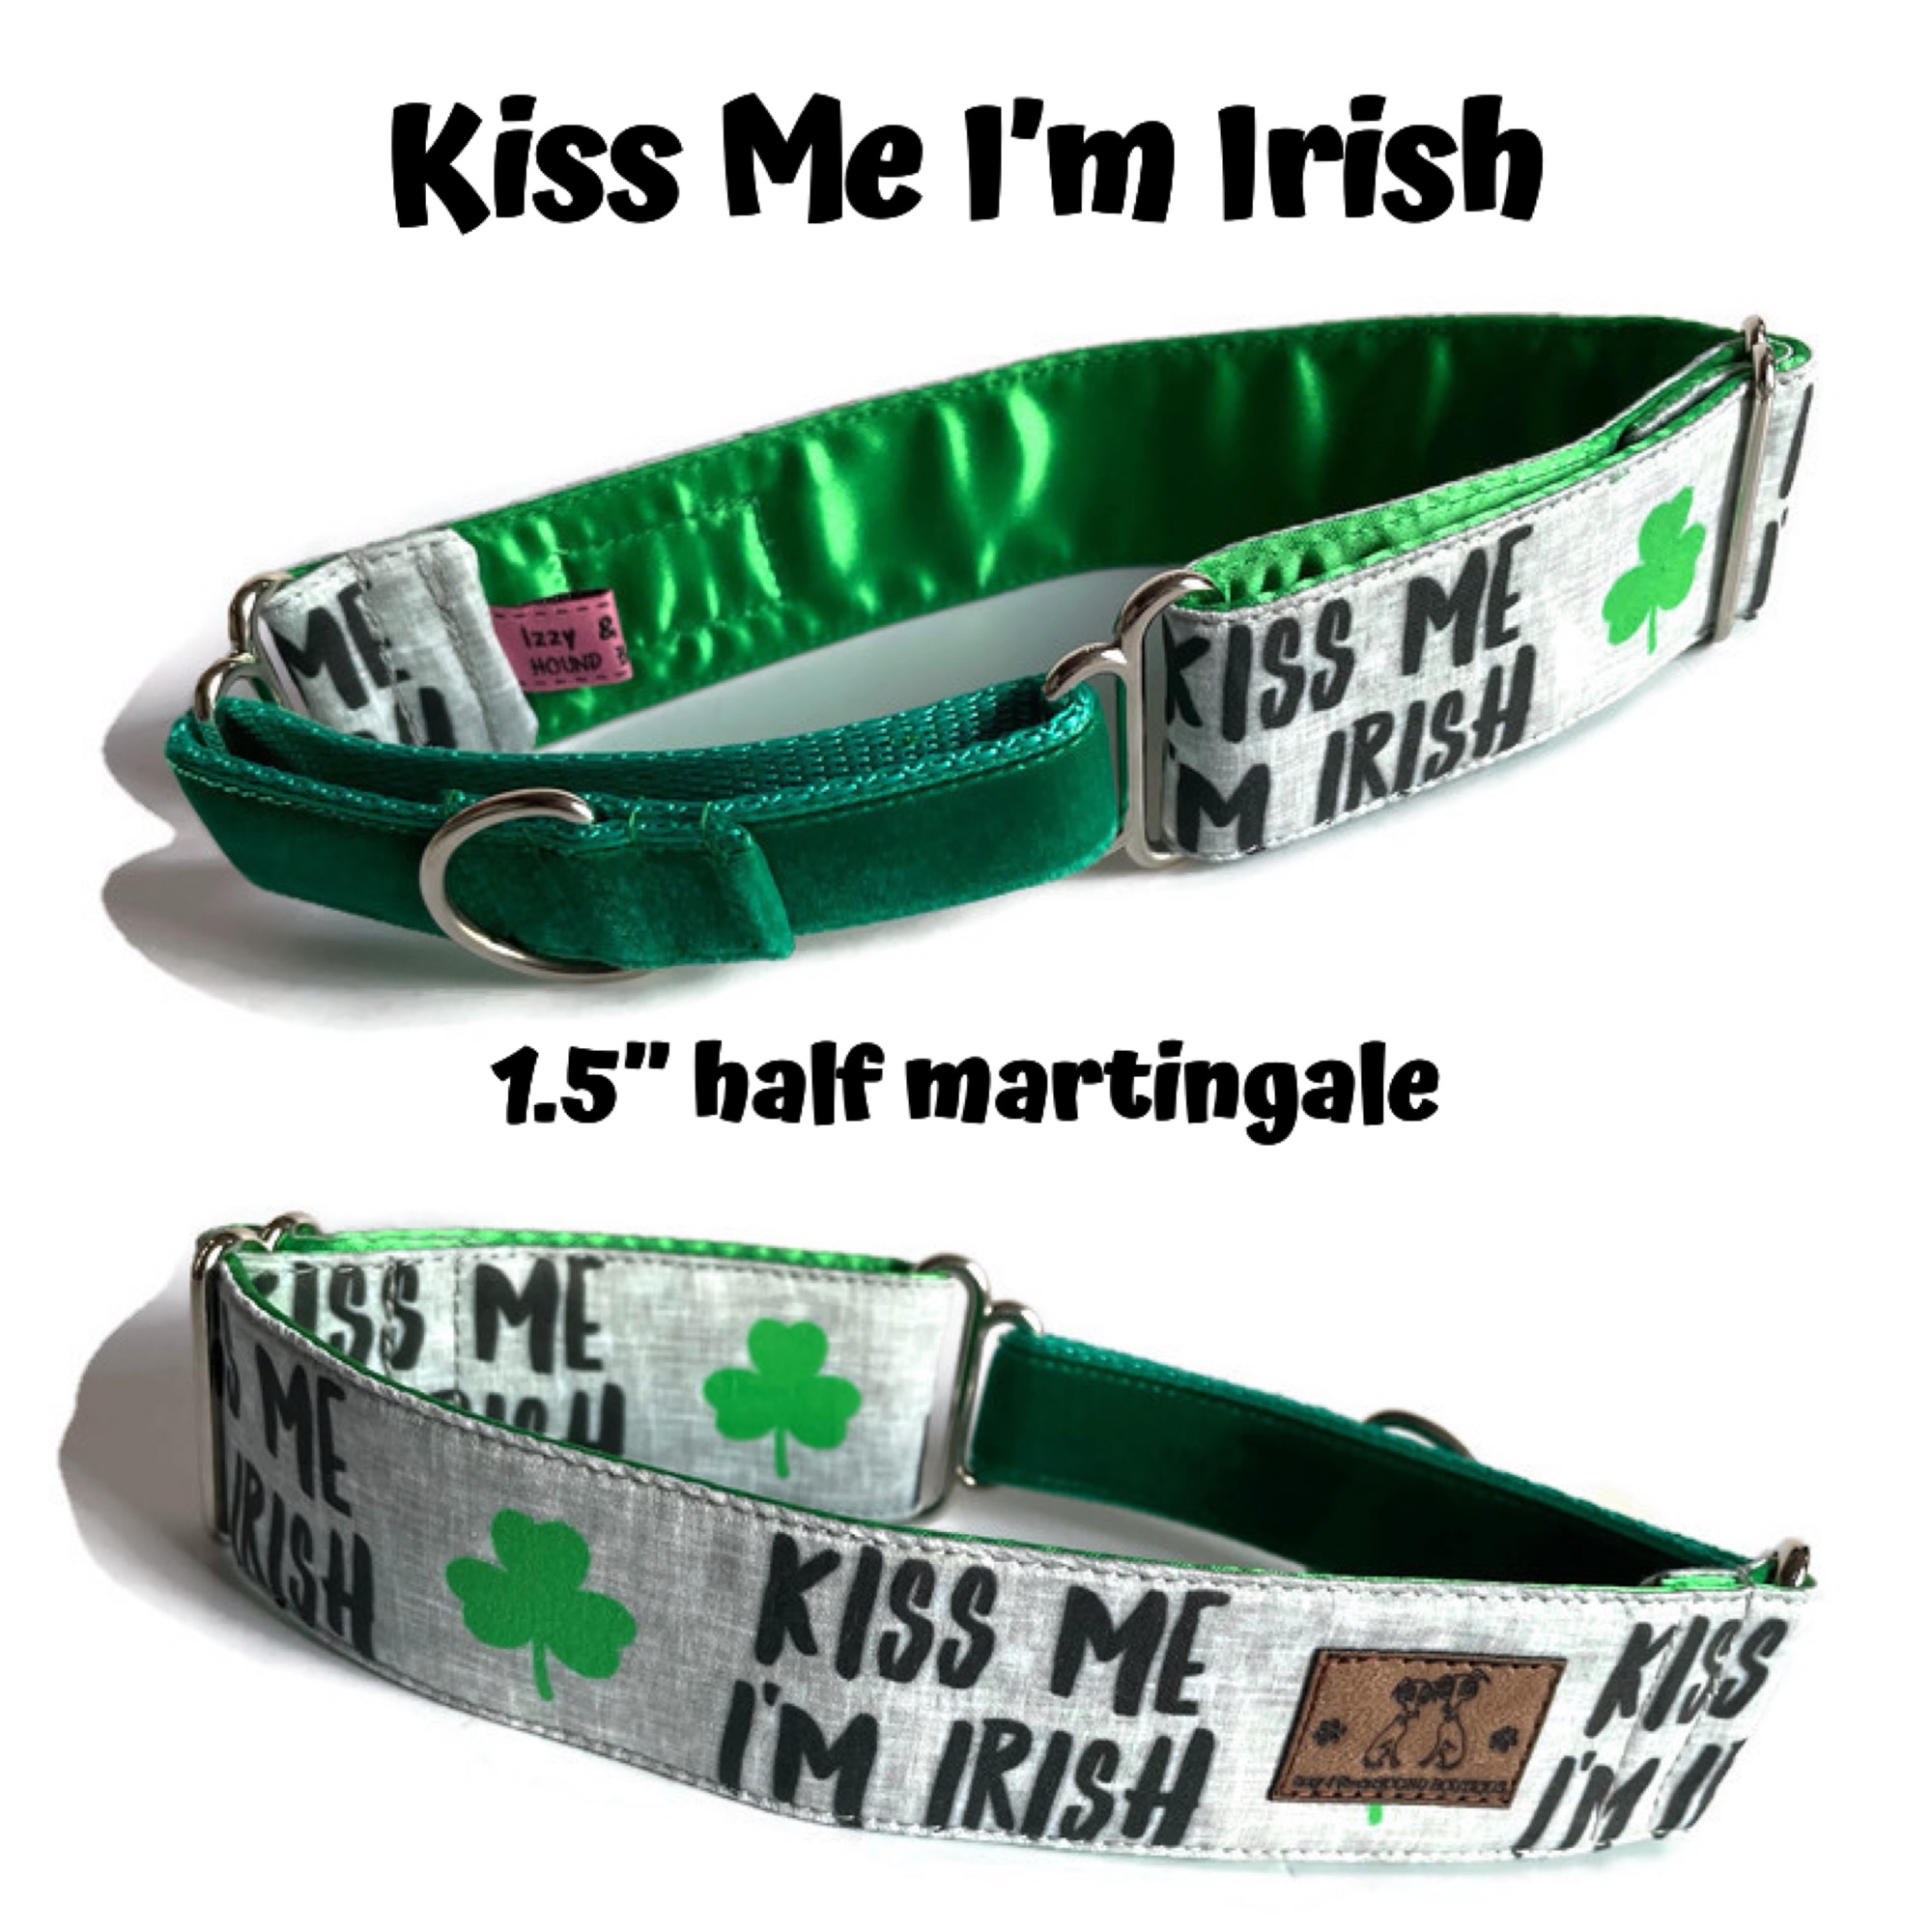 Kiss me i'm irish collar.JPG